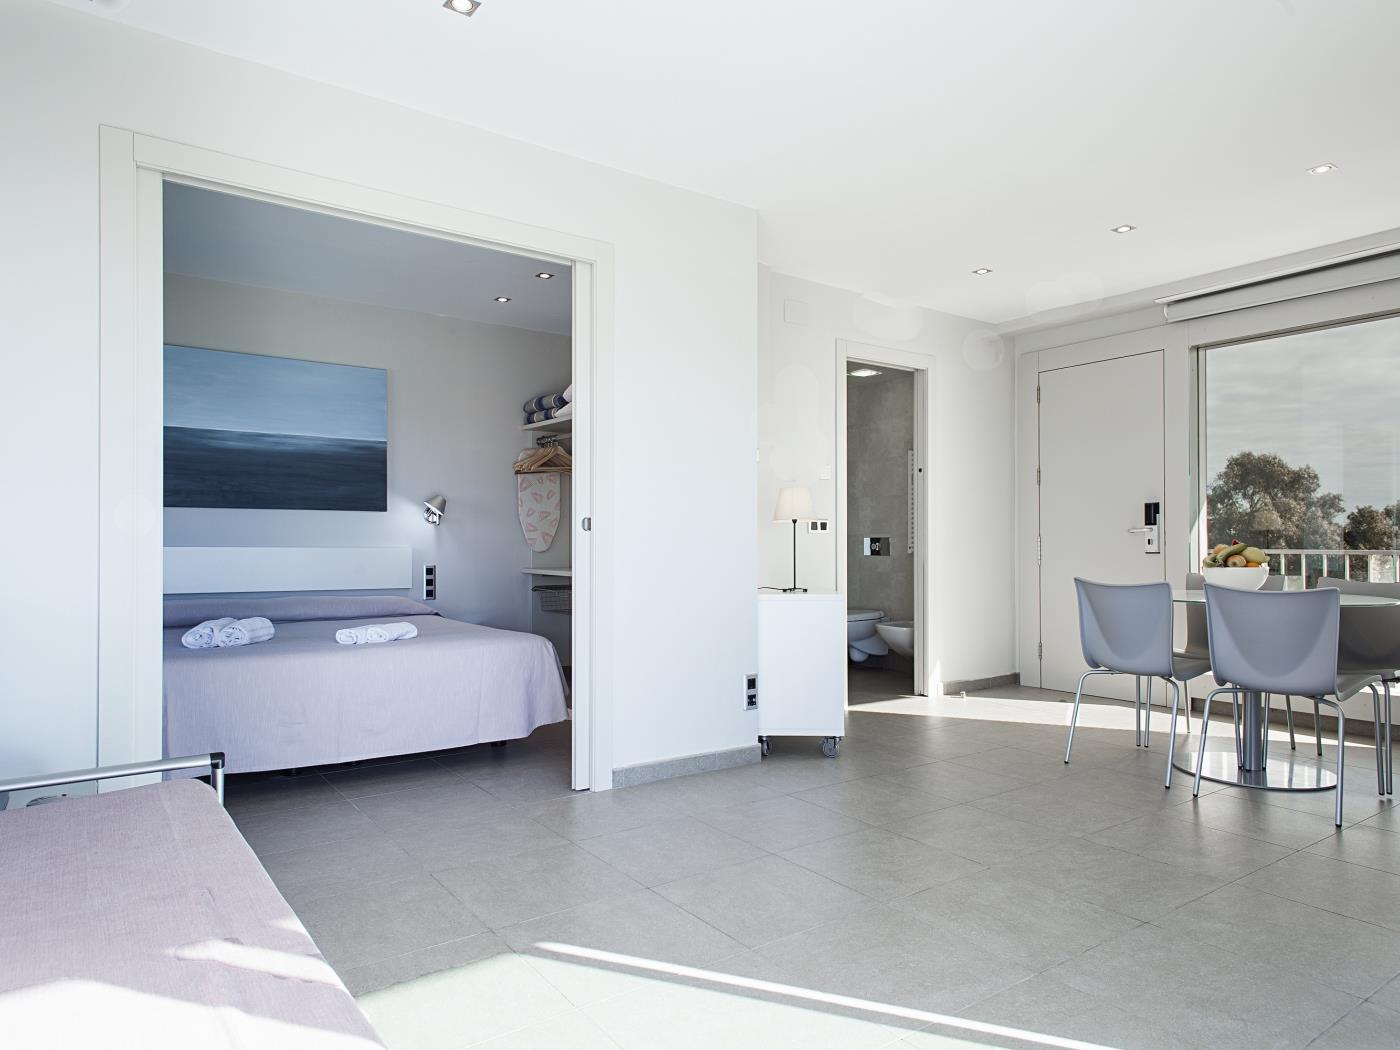 Apartmento standart con vistas directas al mar en Castelldefels